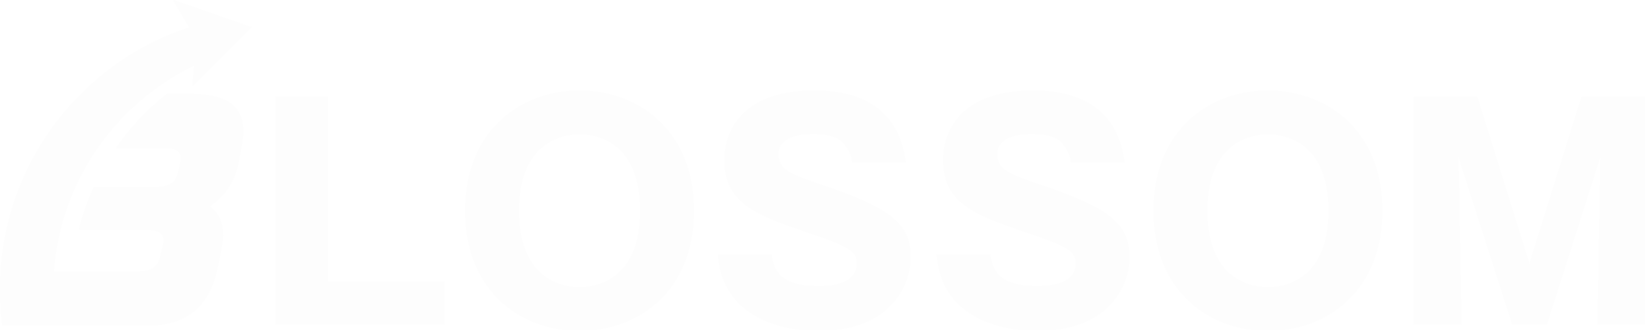 BLOSSOM ロゴ